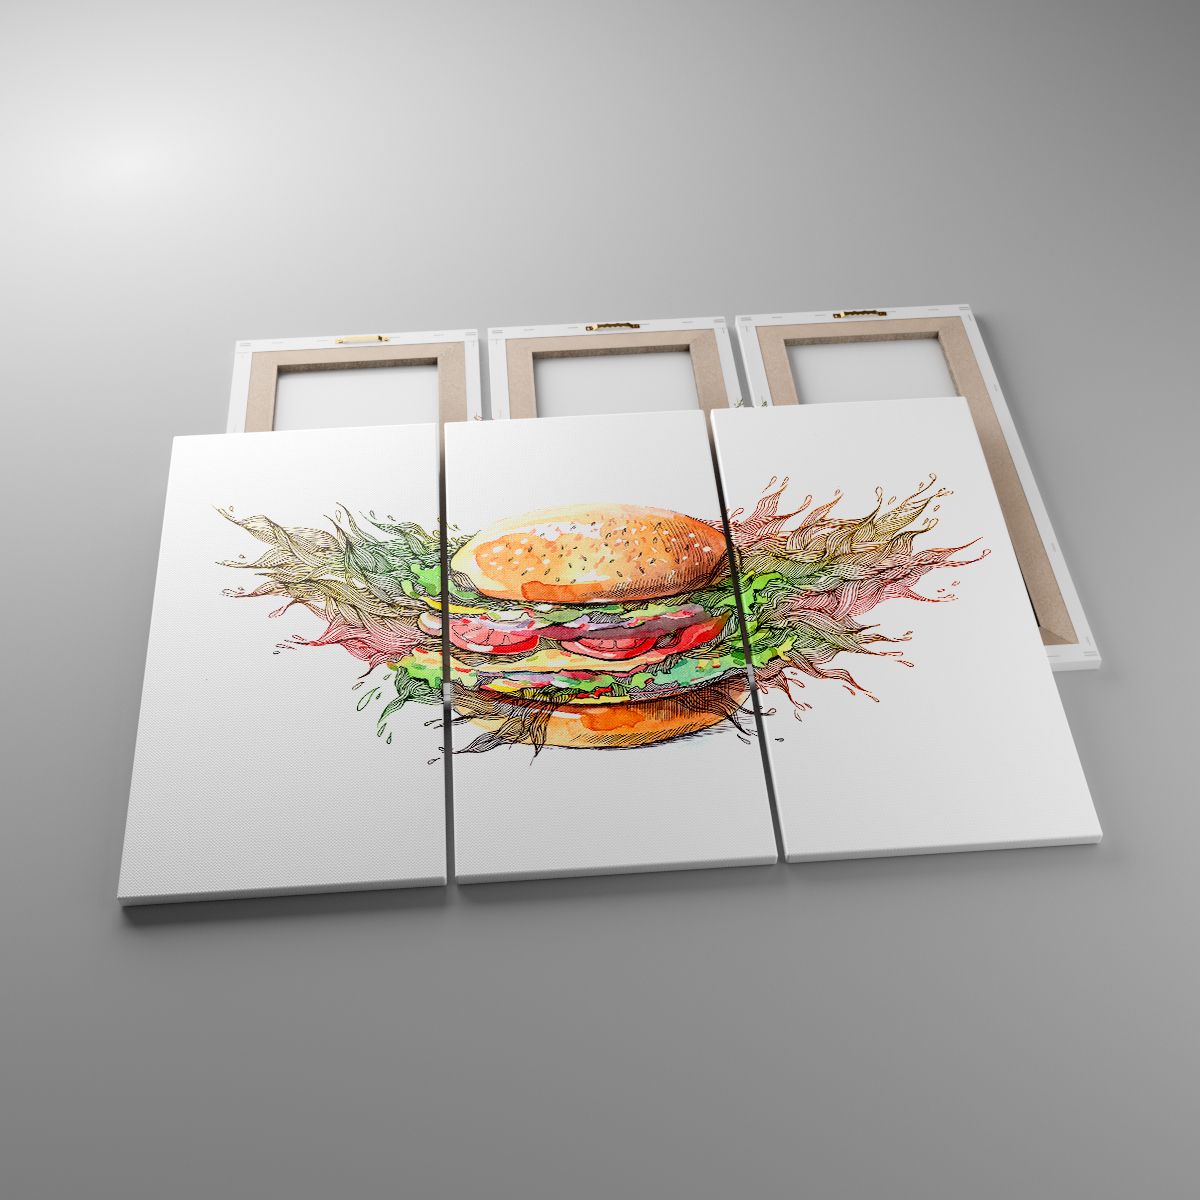 Obrazy Gastronomia, Obrazy Hamburger, Obrazy Kulinaria, Obrazy Kuchnia, Obrazy Fast Food